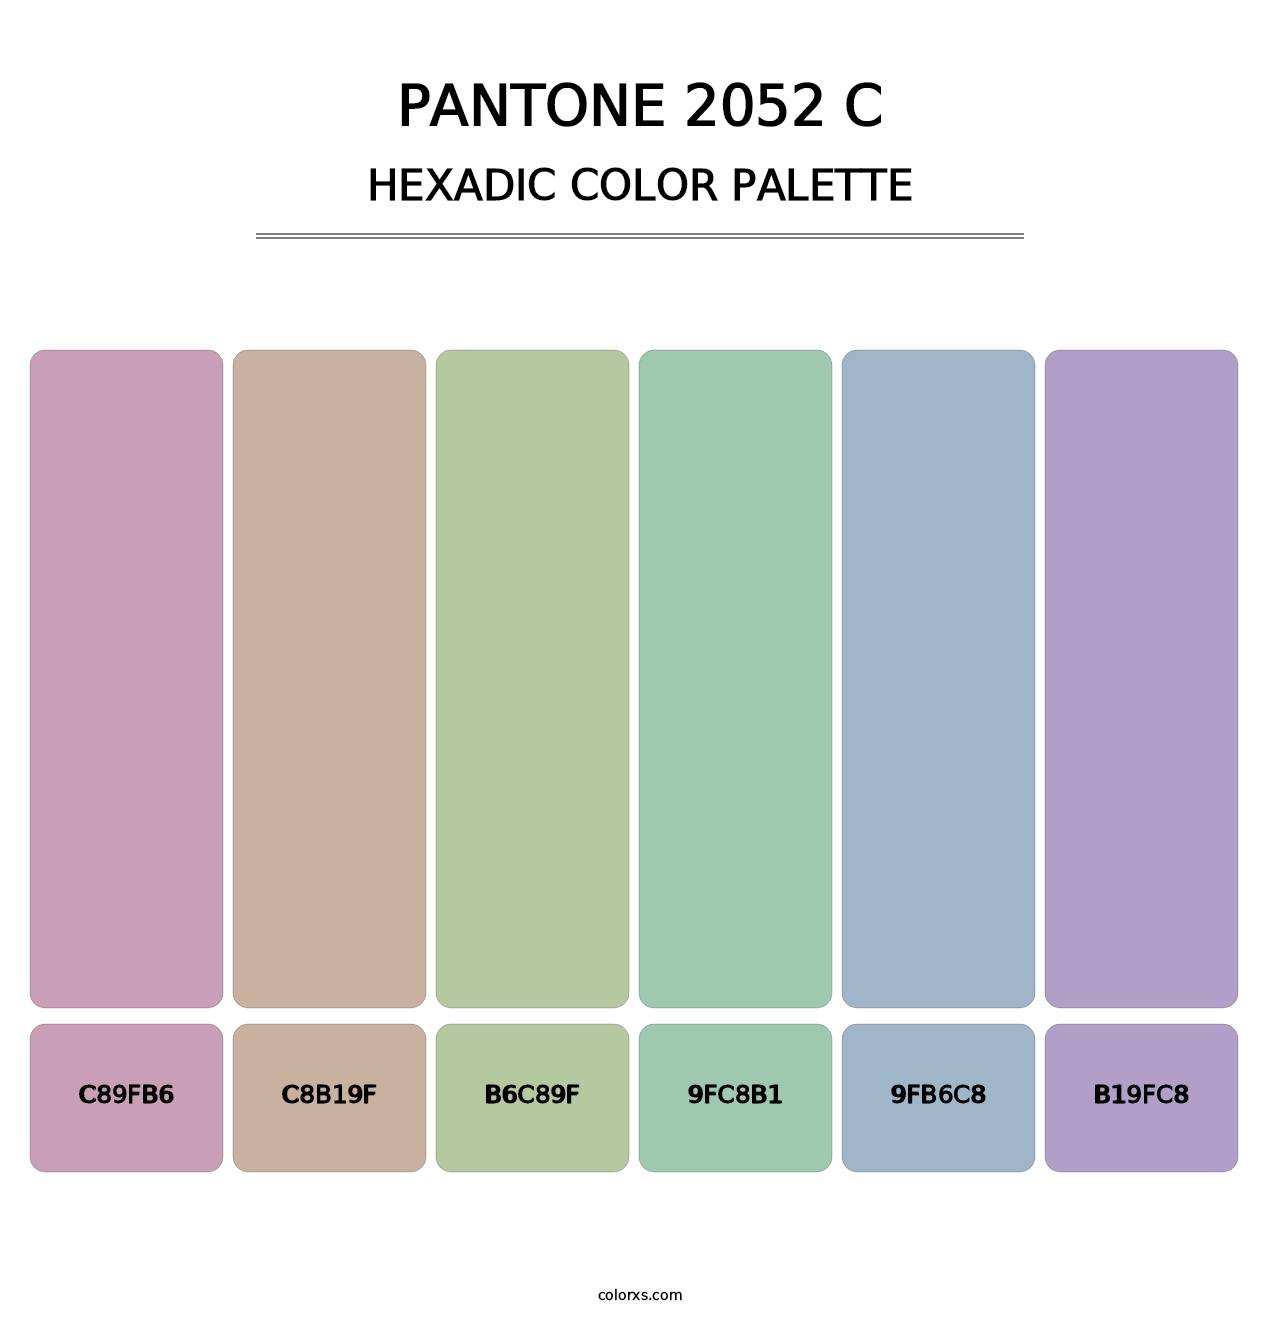 PANTONE 2052 C - Hexadic Color Palette